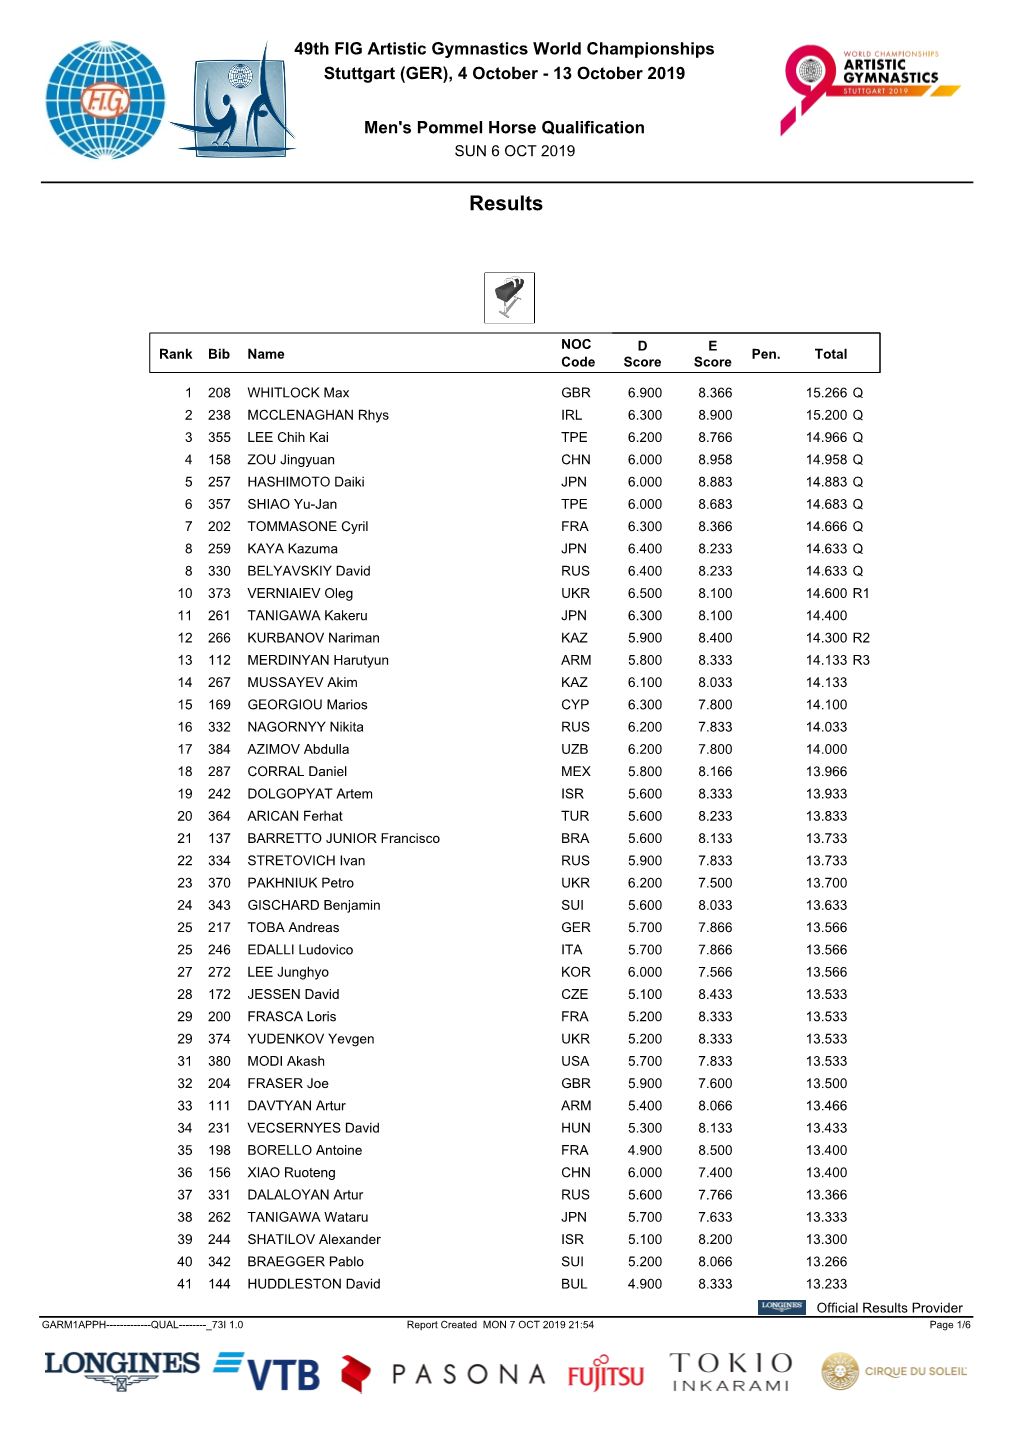 13 October 2019 Men's Pommel Horse Qualification